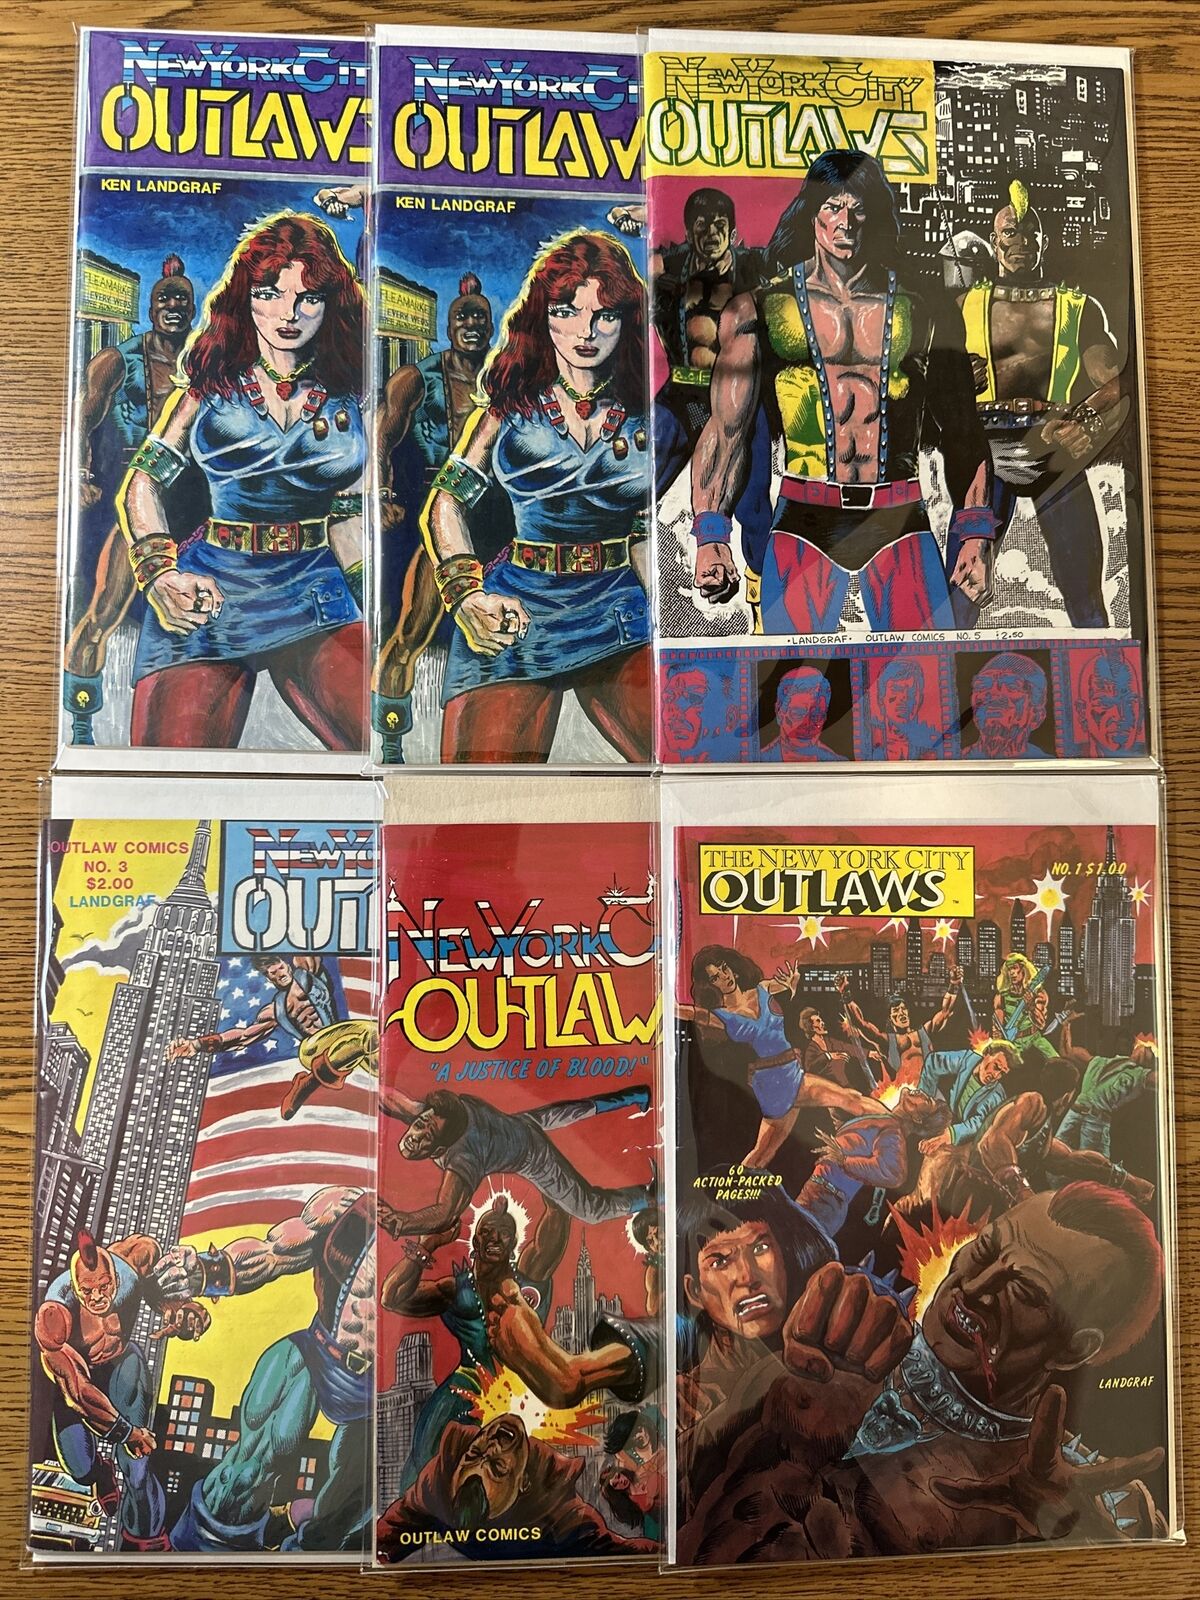 The New York City Outlaws #1 2 3 4 5 COMPLETE Lot Run Comics 1984 Ken Landgraf